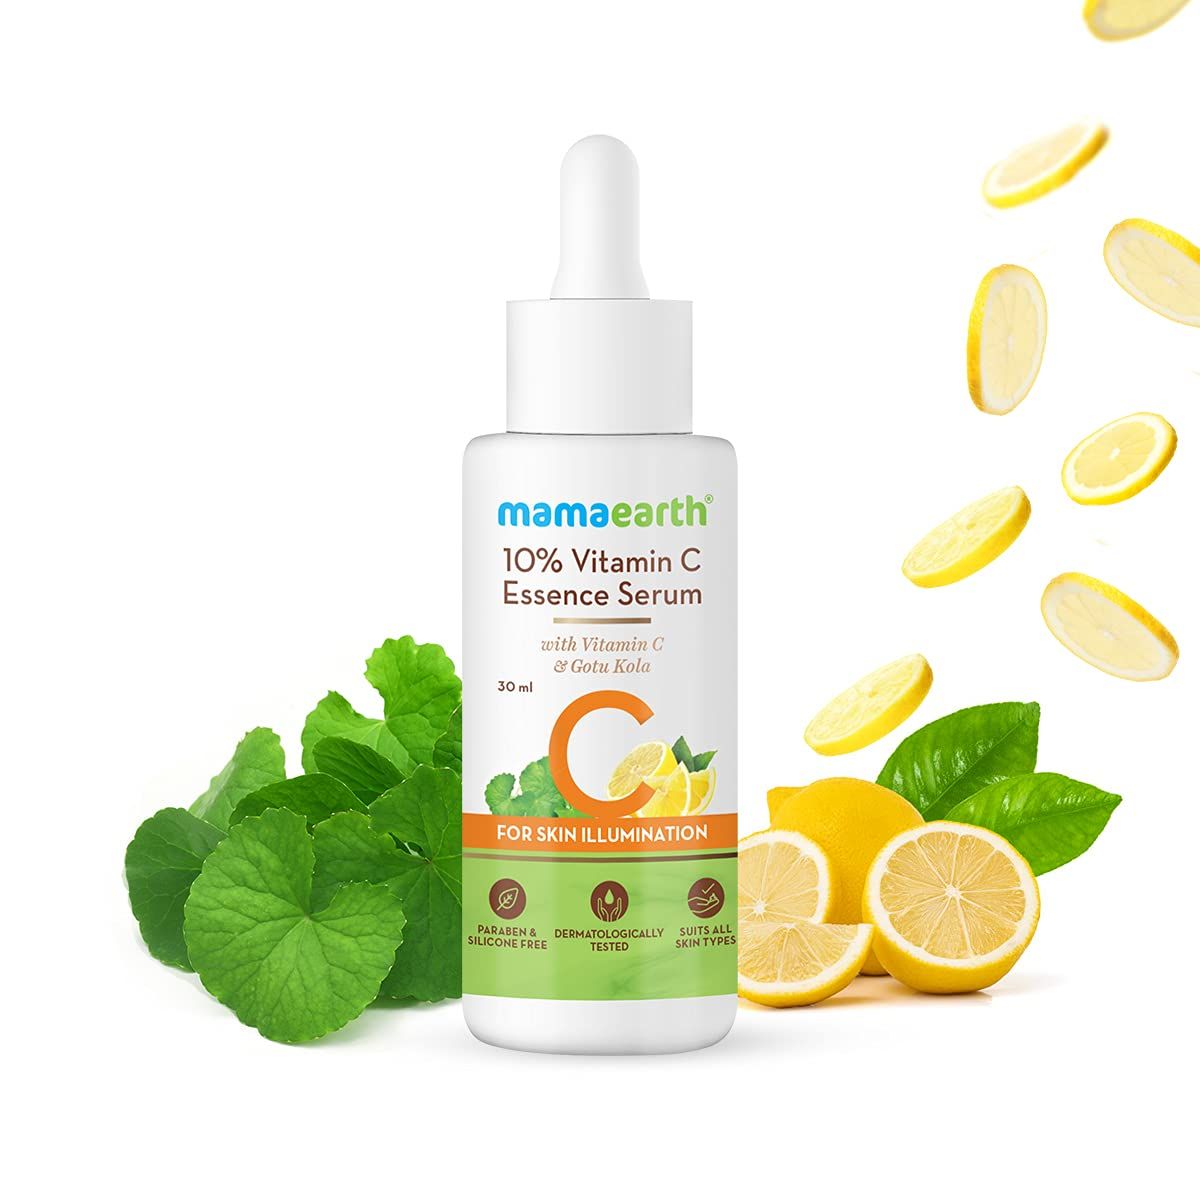 10% Vitamin C Essence Serum with Vitamin C and Gotu Kola for Skin Illumination – 30ml